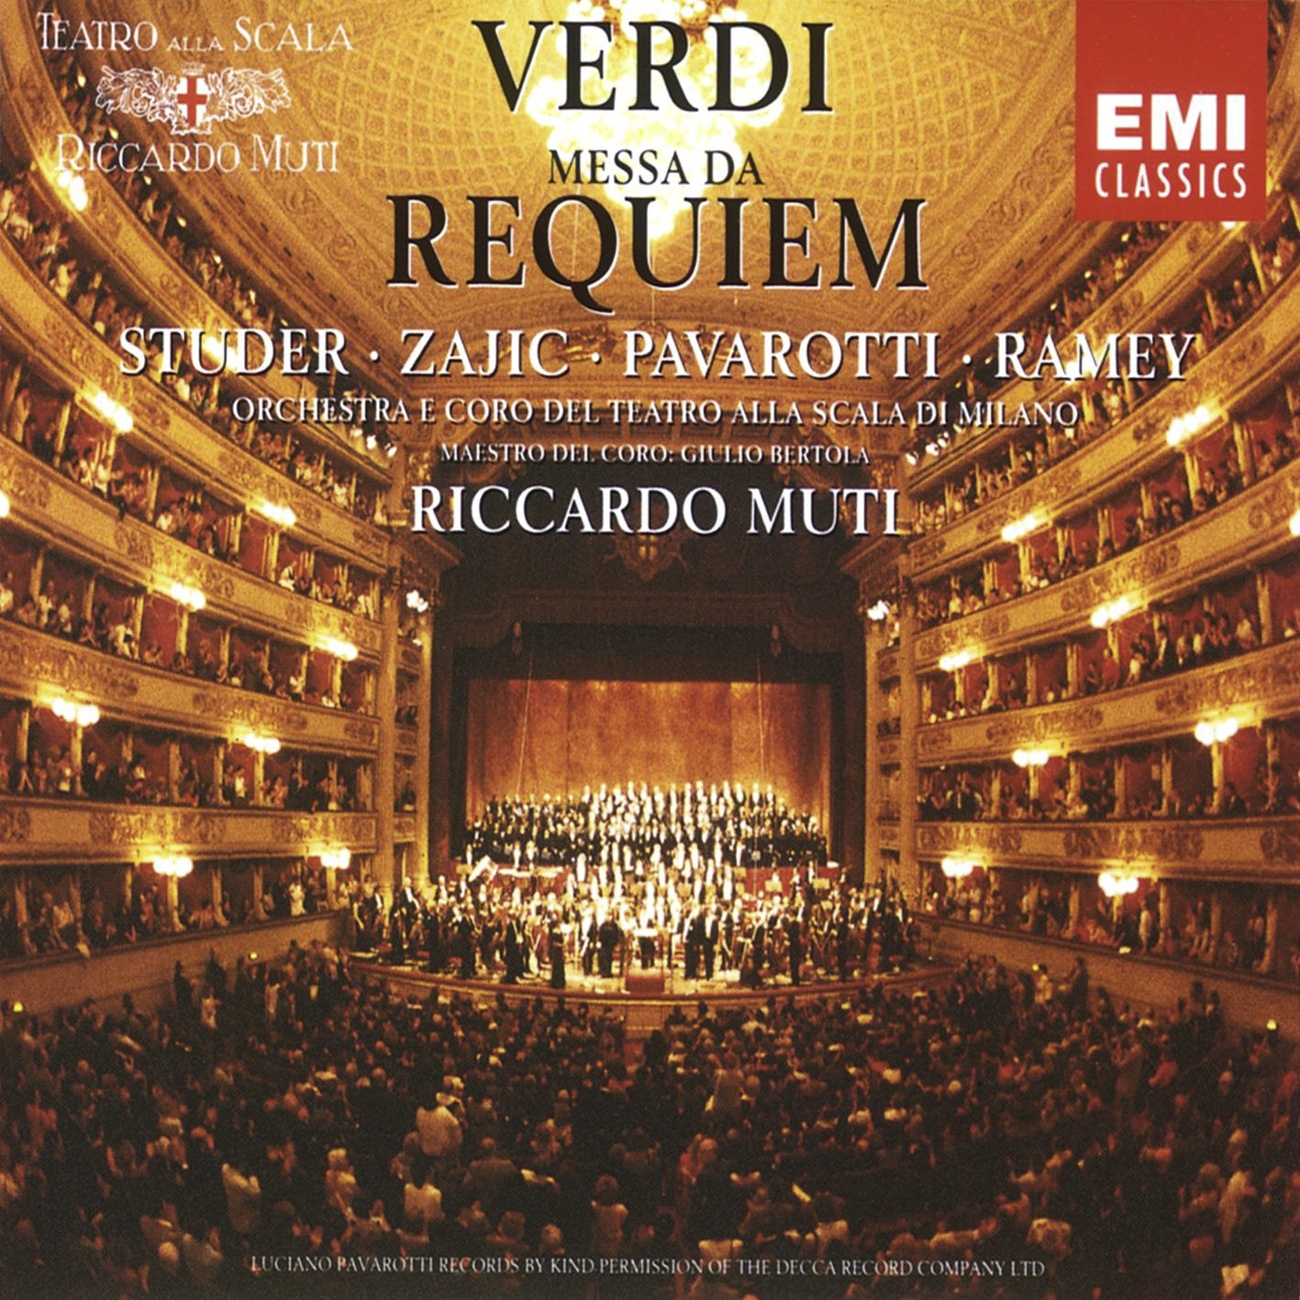 Messa da Requiem: Lux aeterna